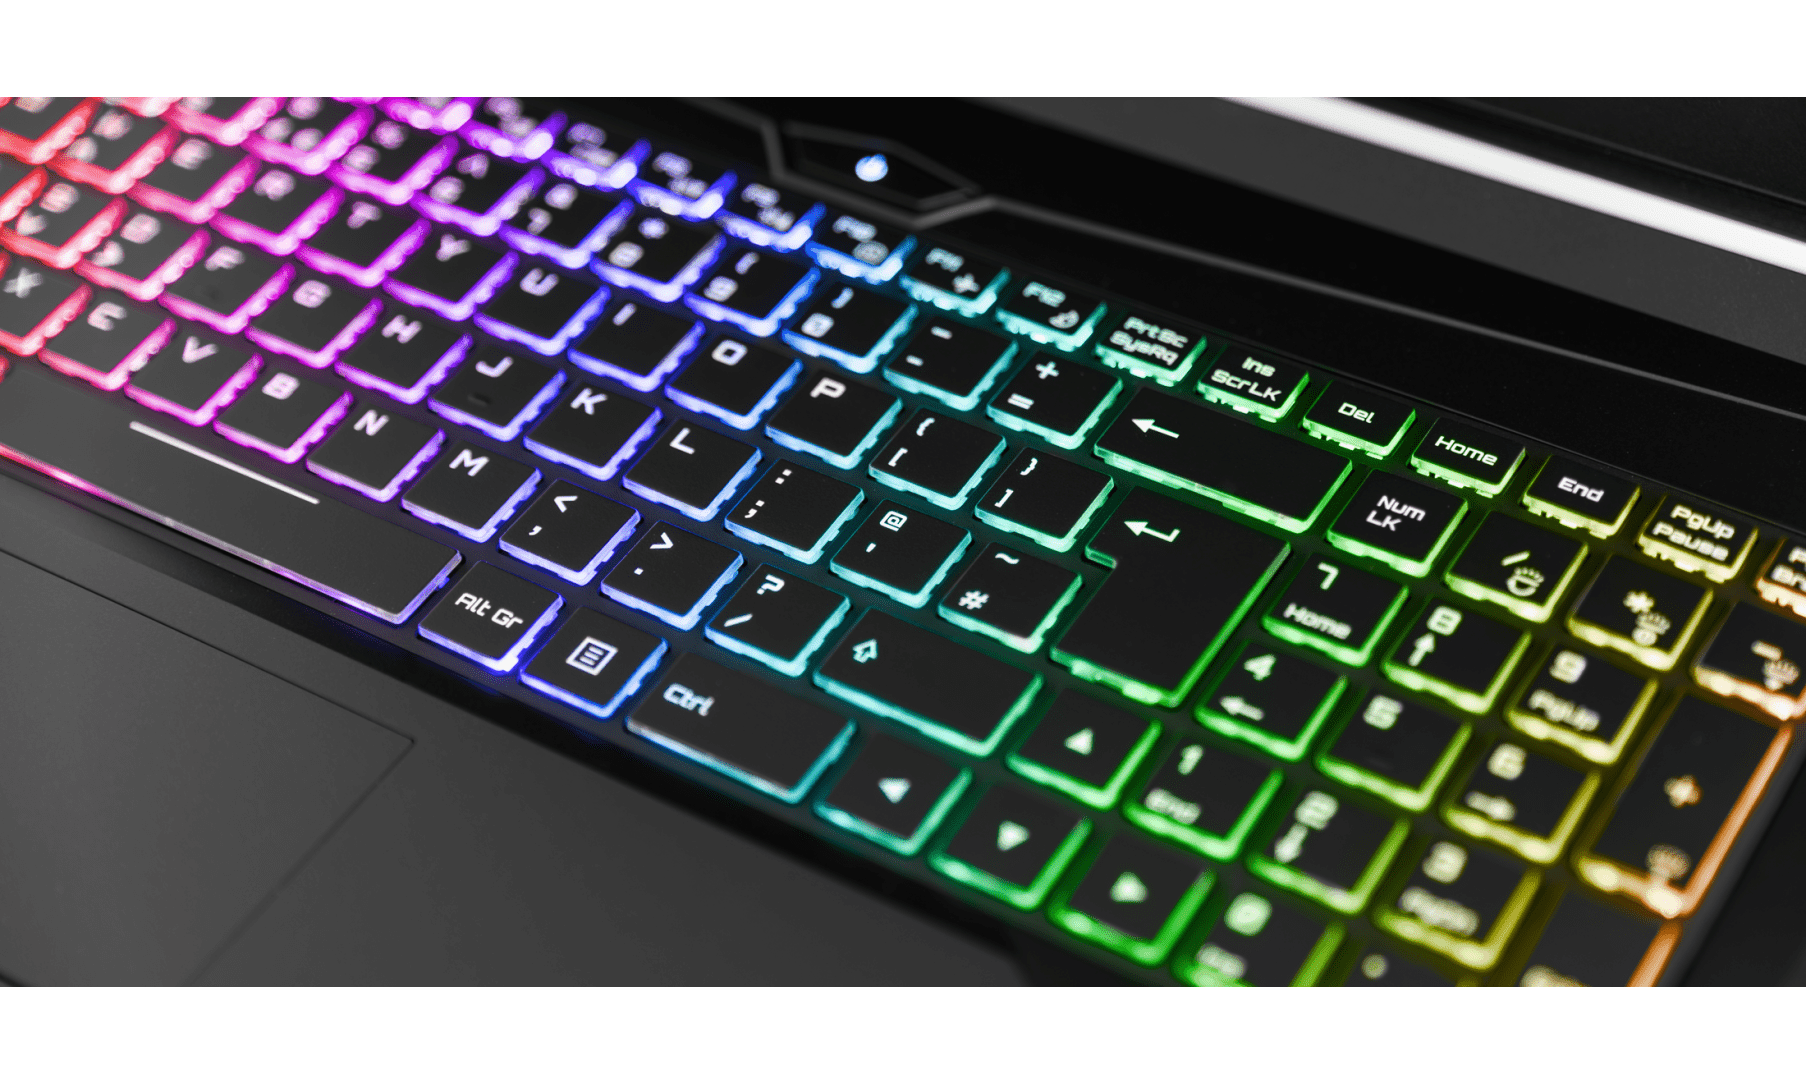 Tastatura Clevo LED RGB N850 / / P950 - TekAdvice - Custom TechWorks